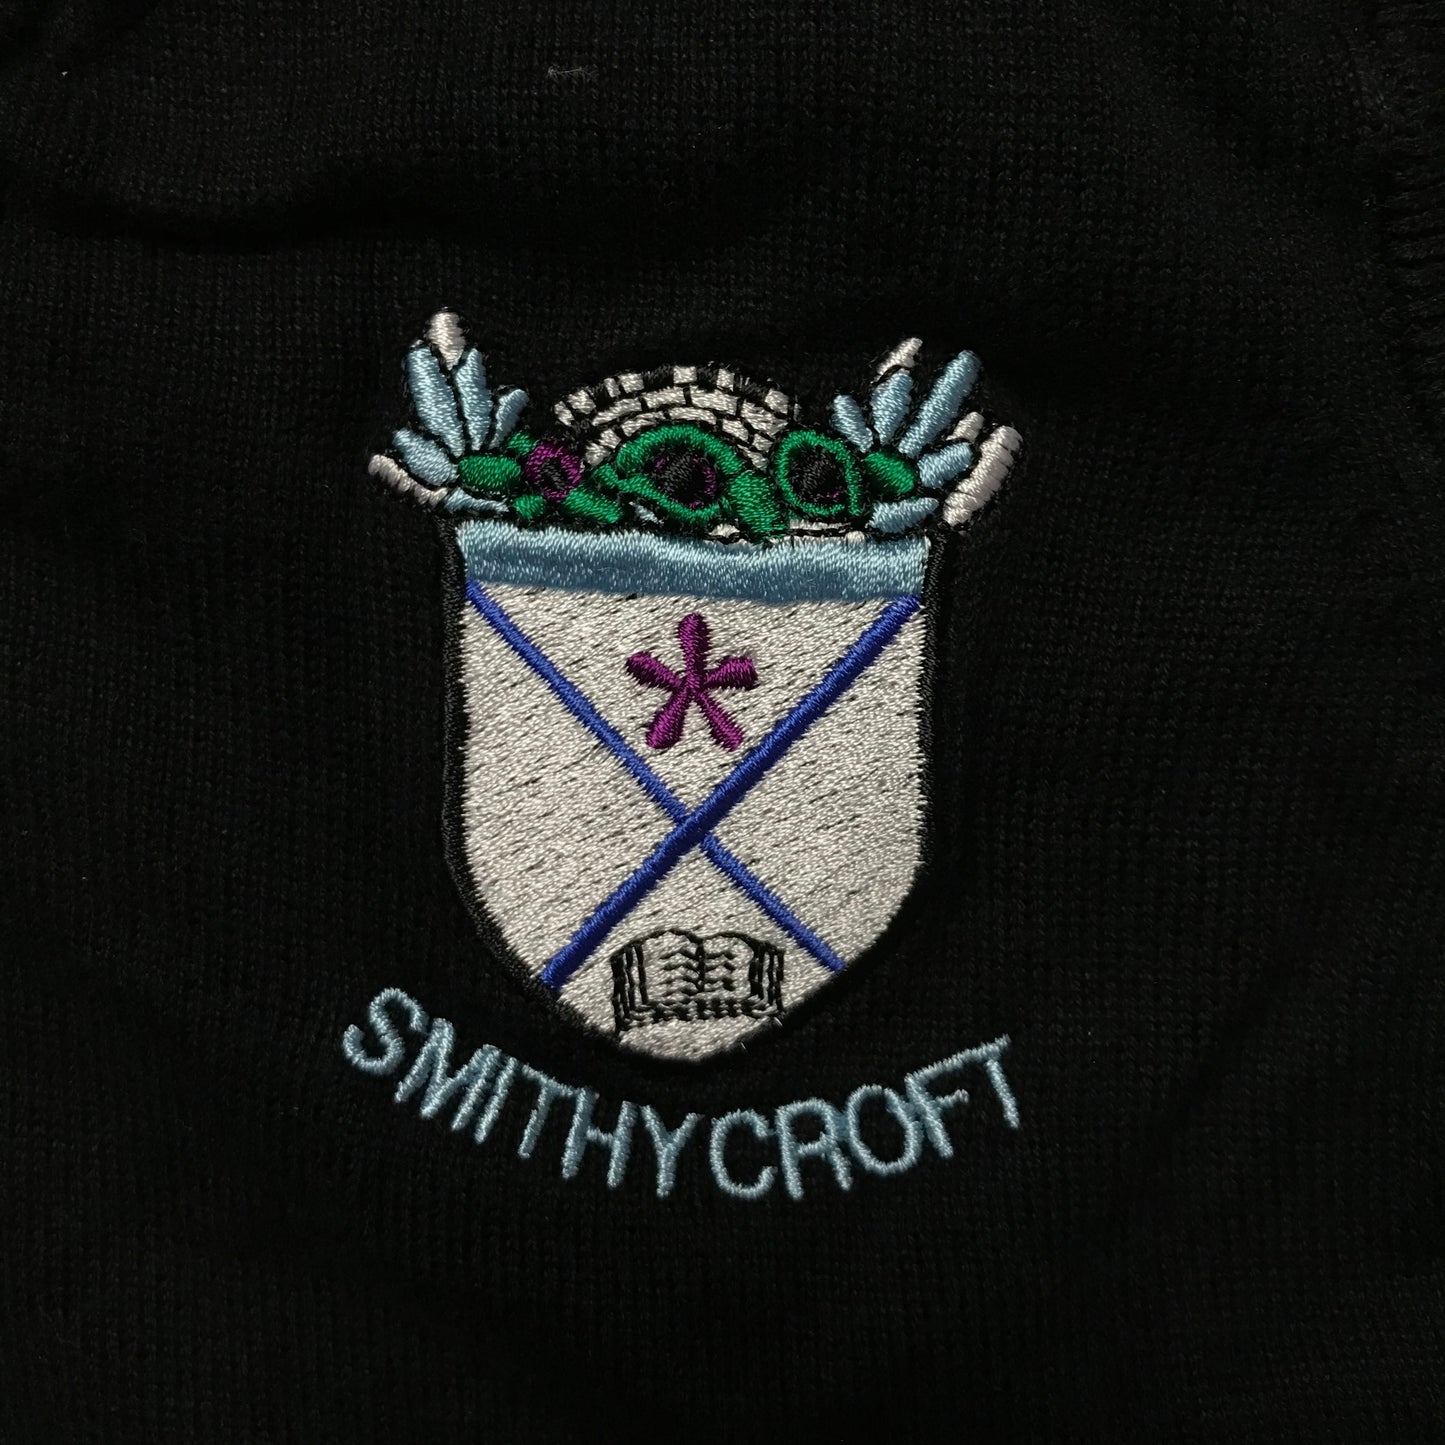 Smithycroft Secondary Black Tank Top